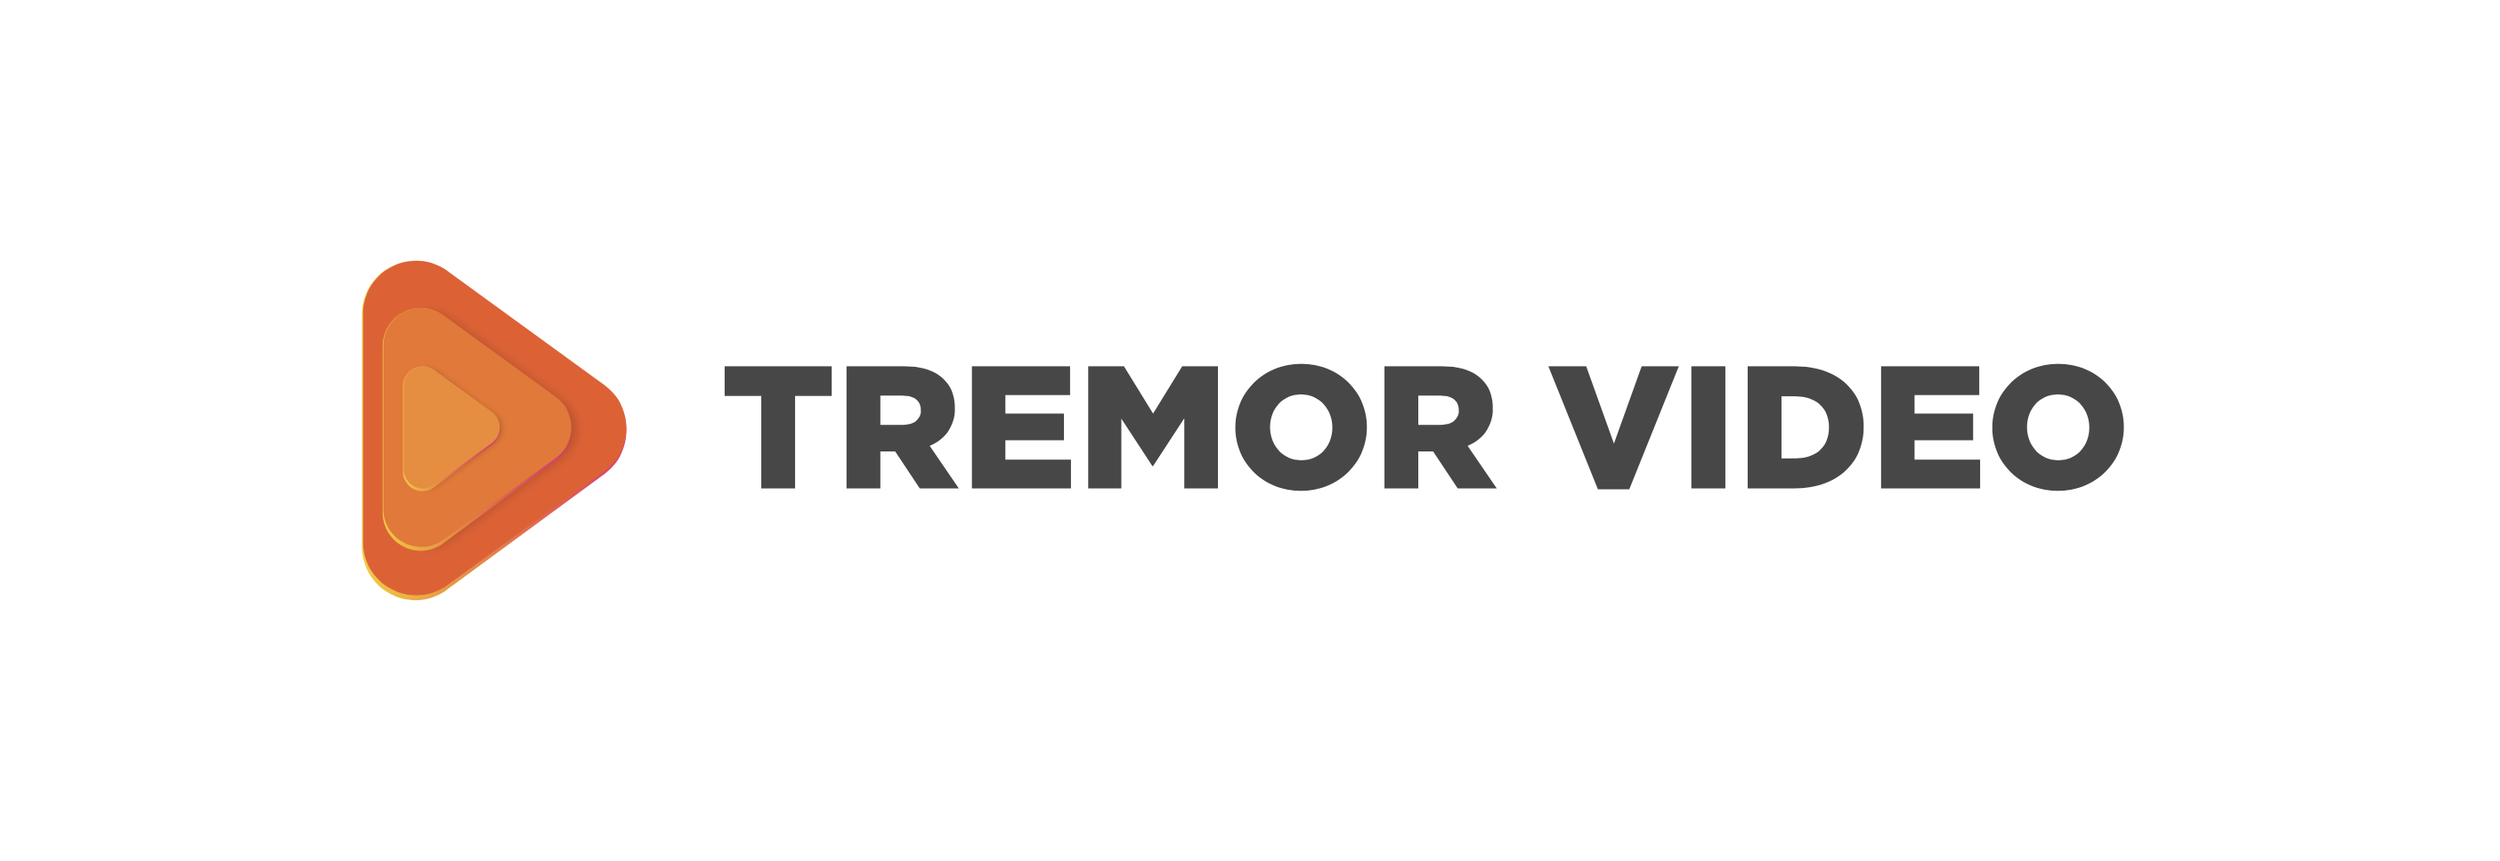 tremor video logo w border.png